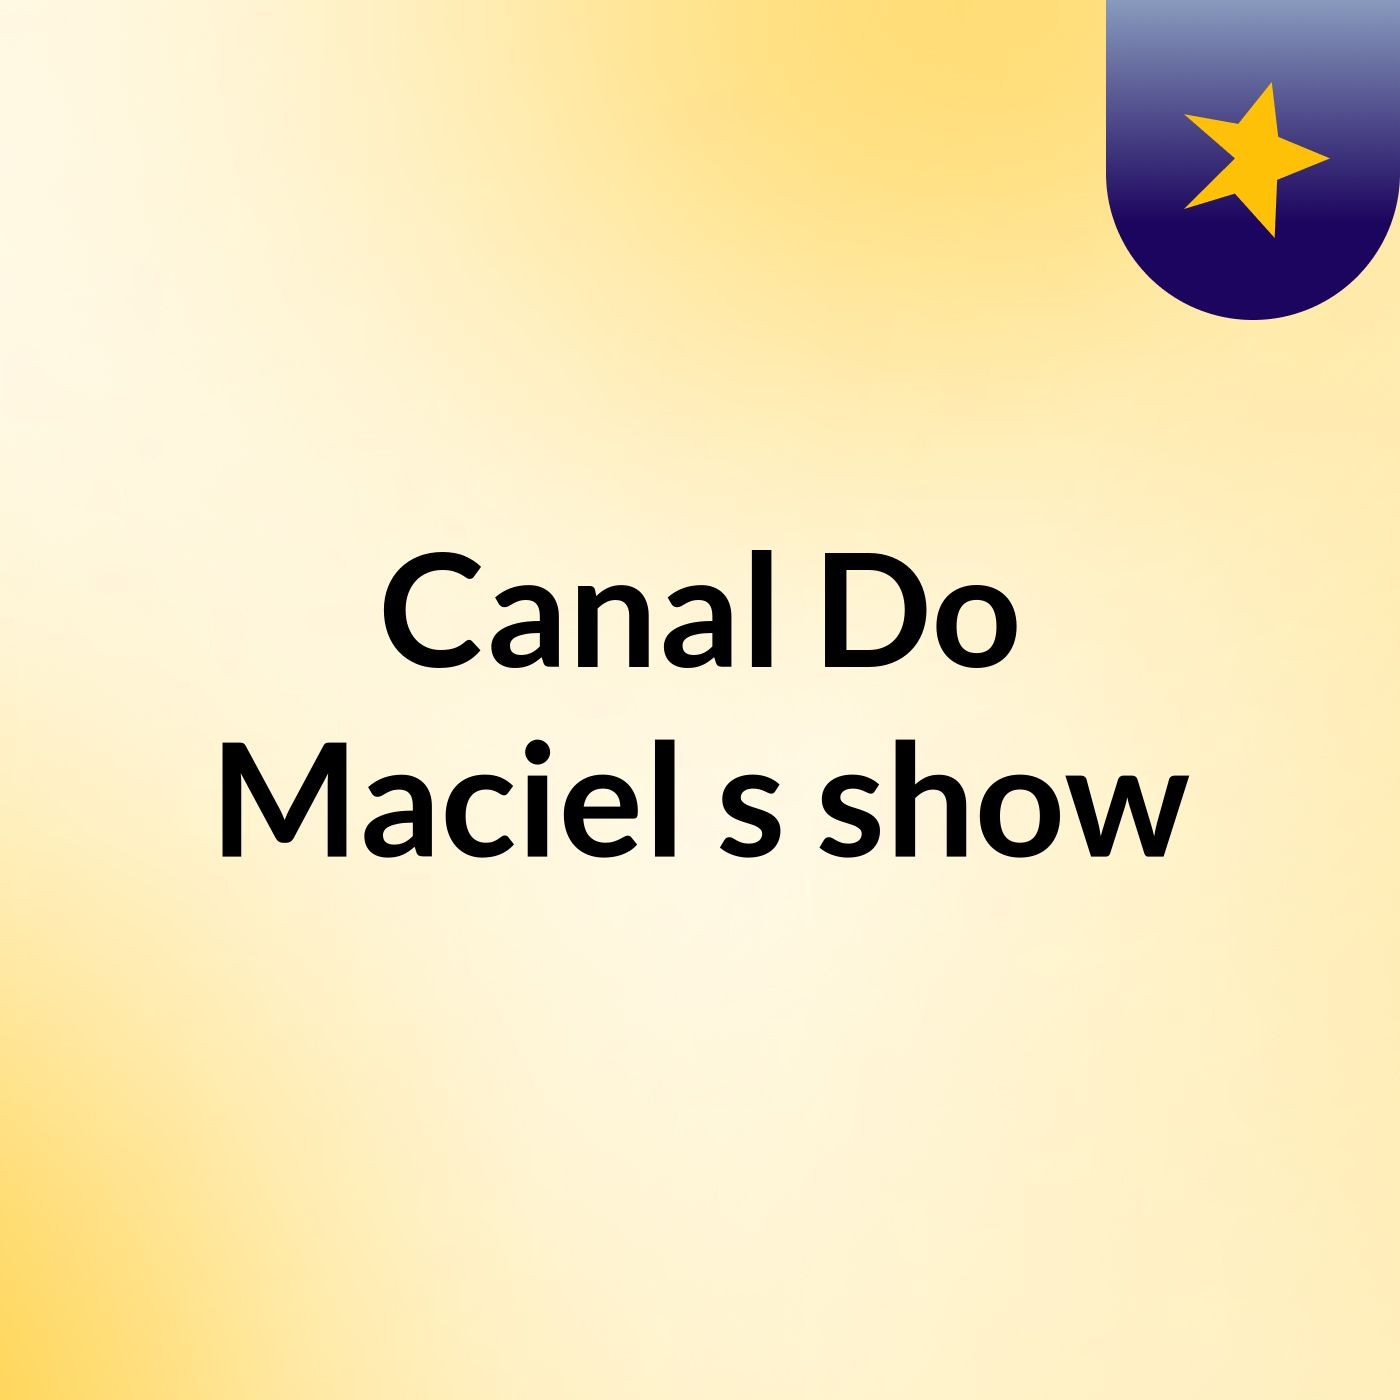 Canal Do Maciel's show